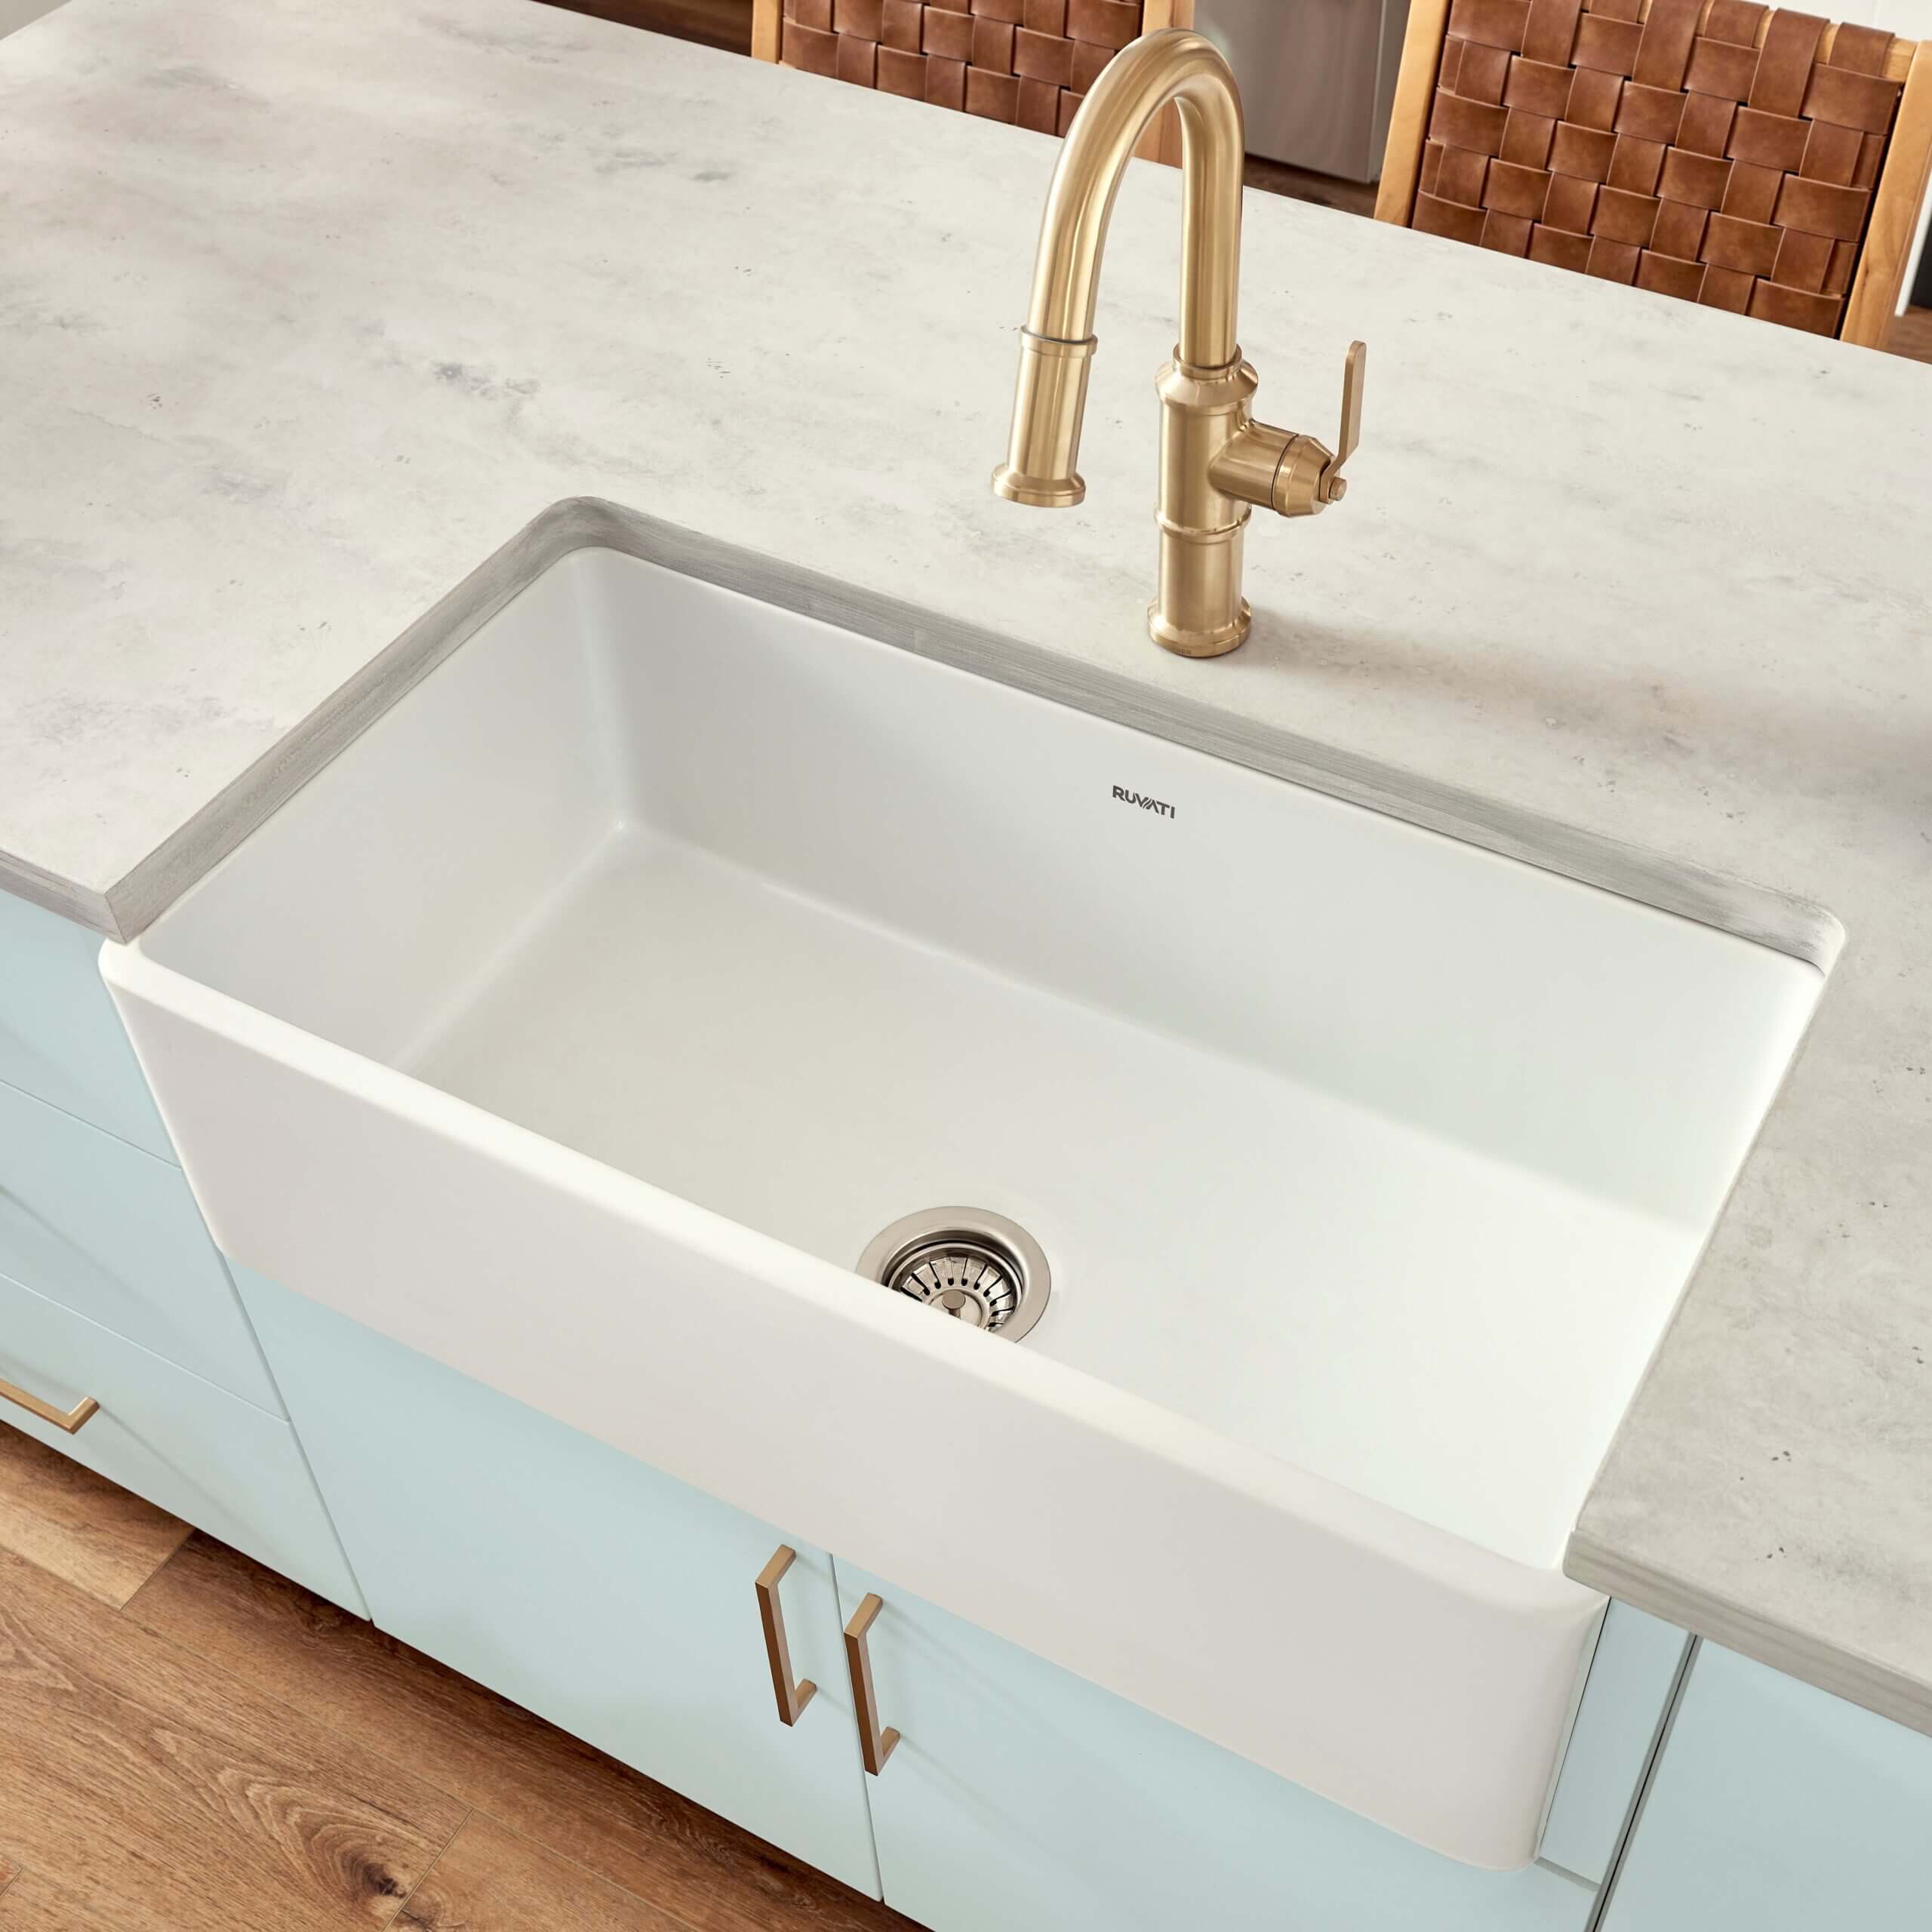 Premium Quality 33-Inch Farmhouse Single Bowl Kitchen Sink